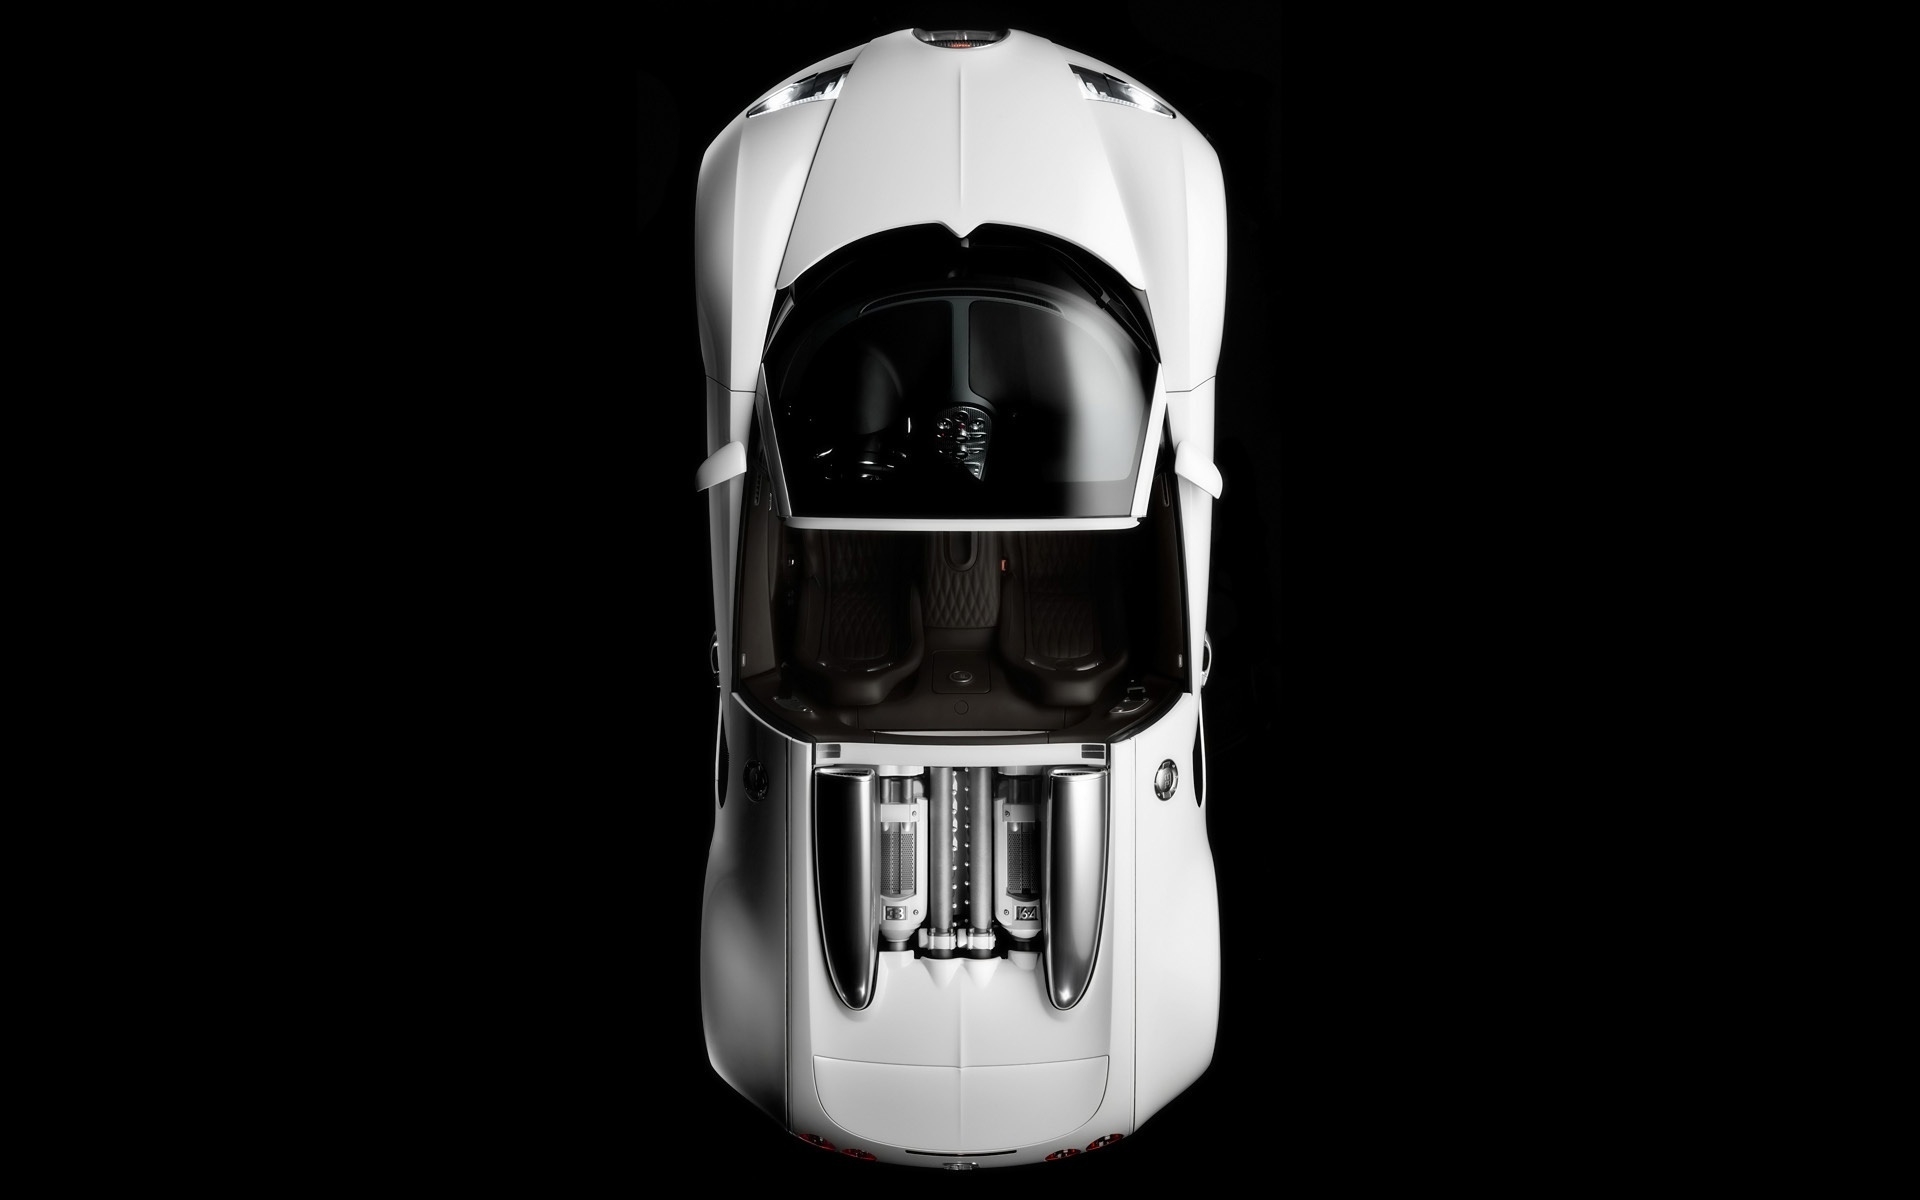 Bugatti Veyron 16.4 Grand Sport Production Version 2009 - Studio Top for 1920 x 1200 widescreen resolution